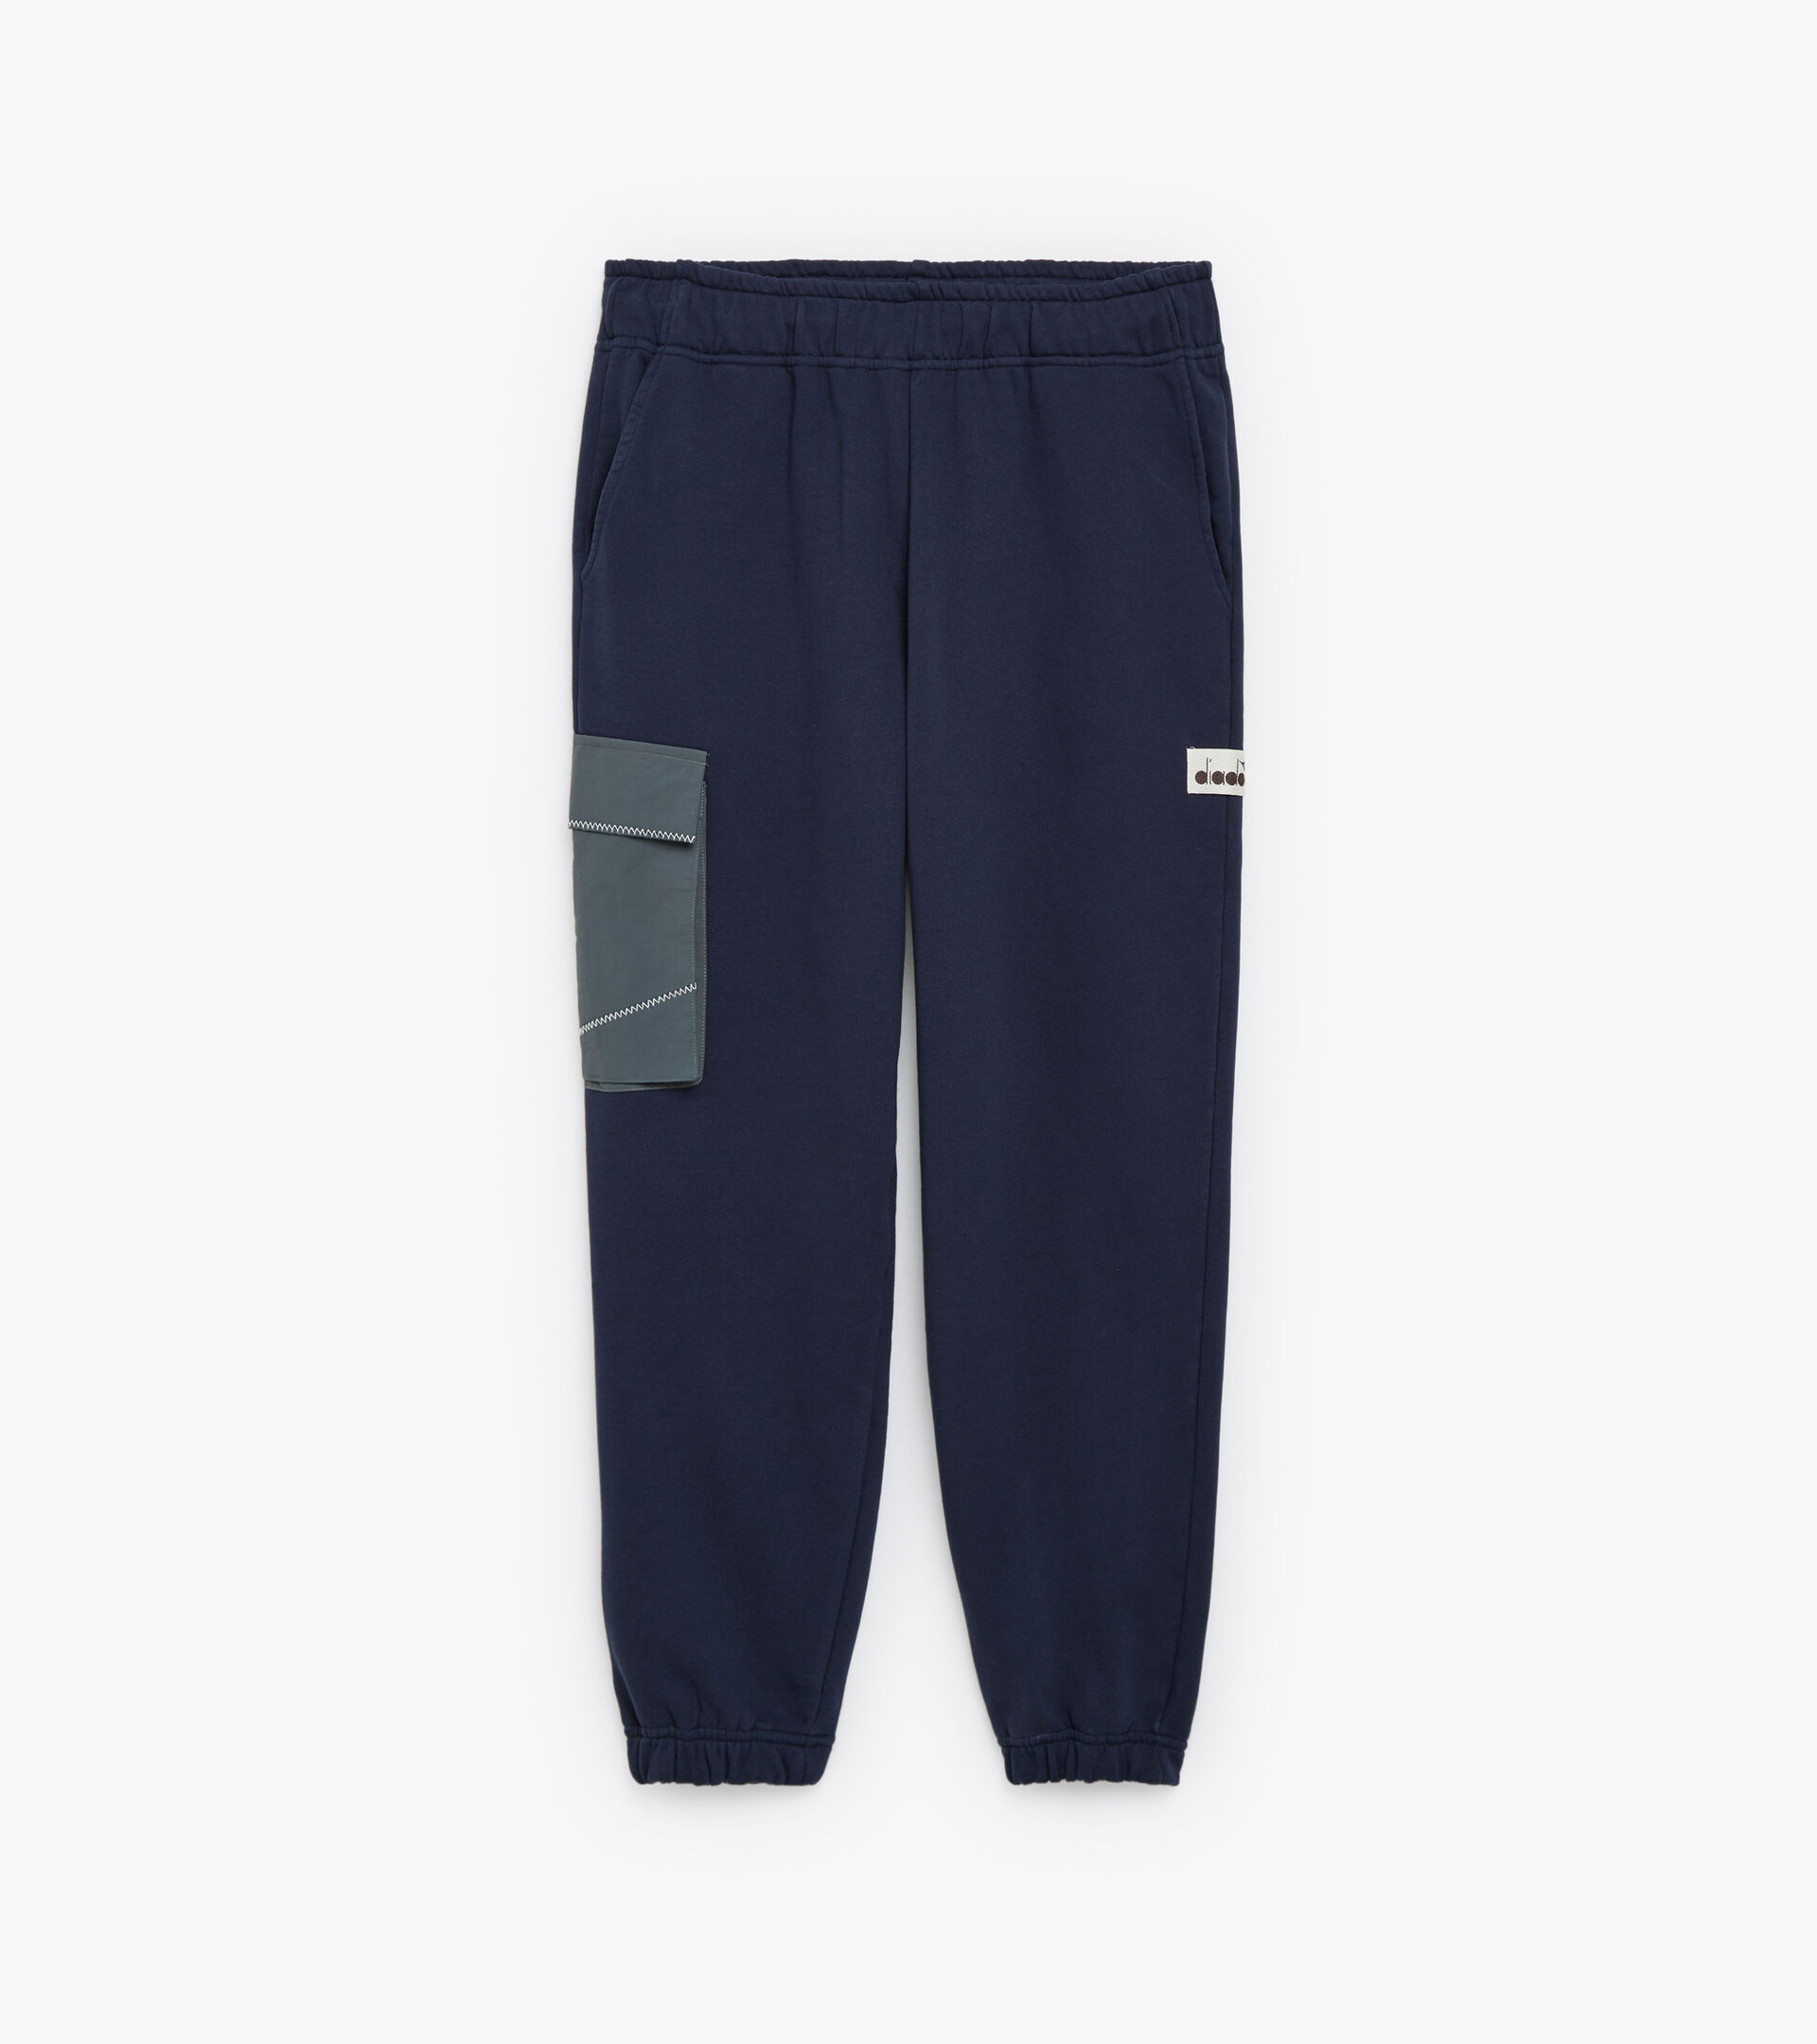 Made in Italy sweatpants - Men  PANT 2030 BLUE CORSAIR - Diadora